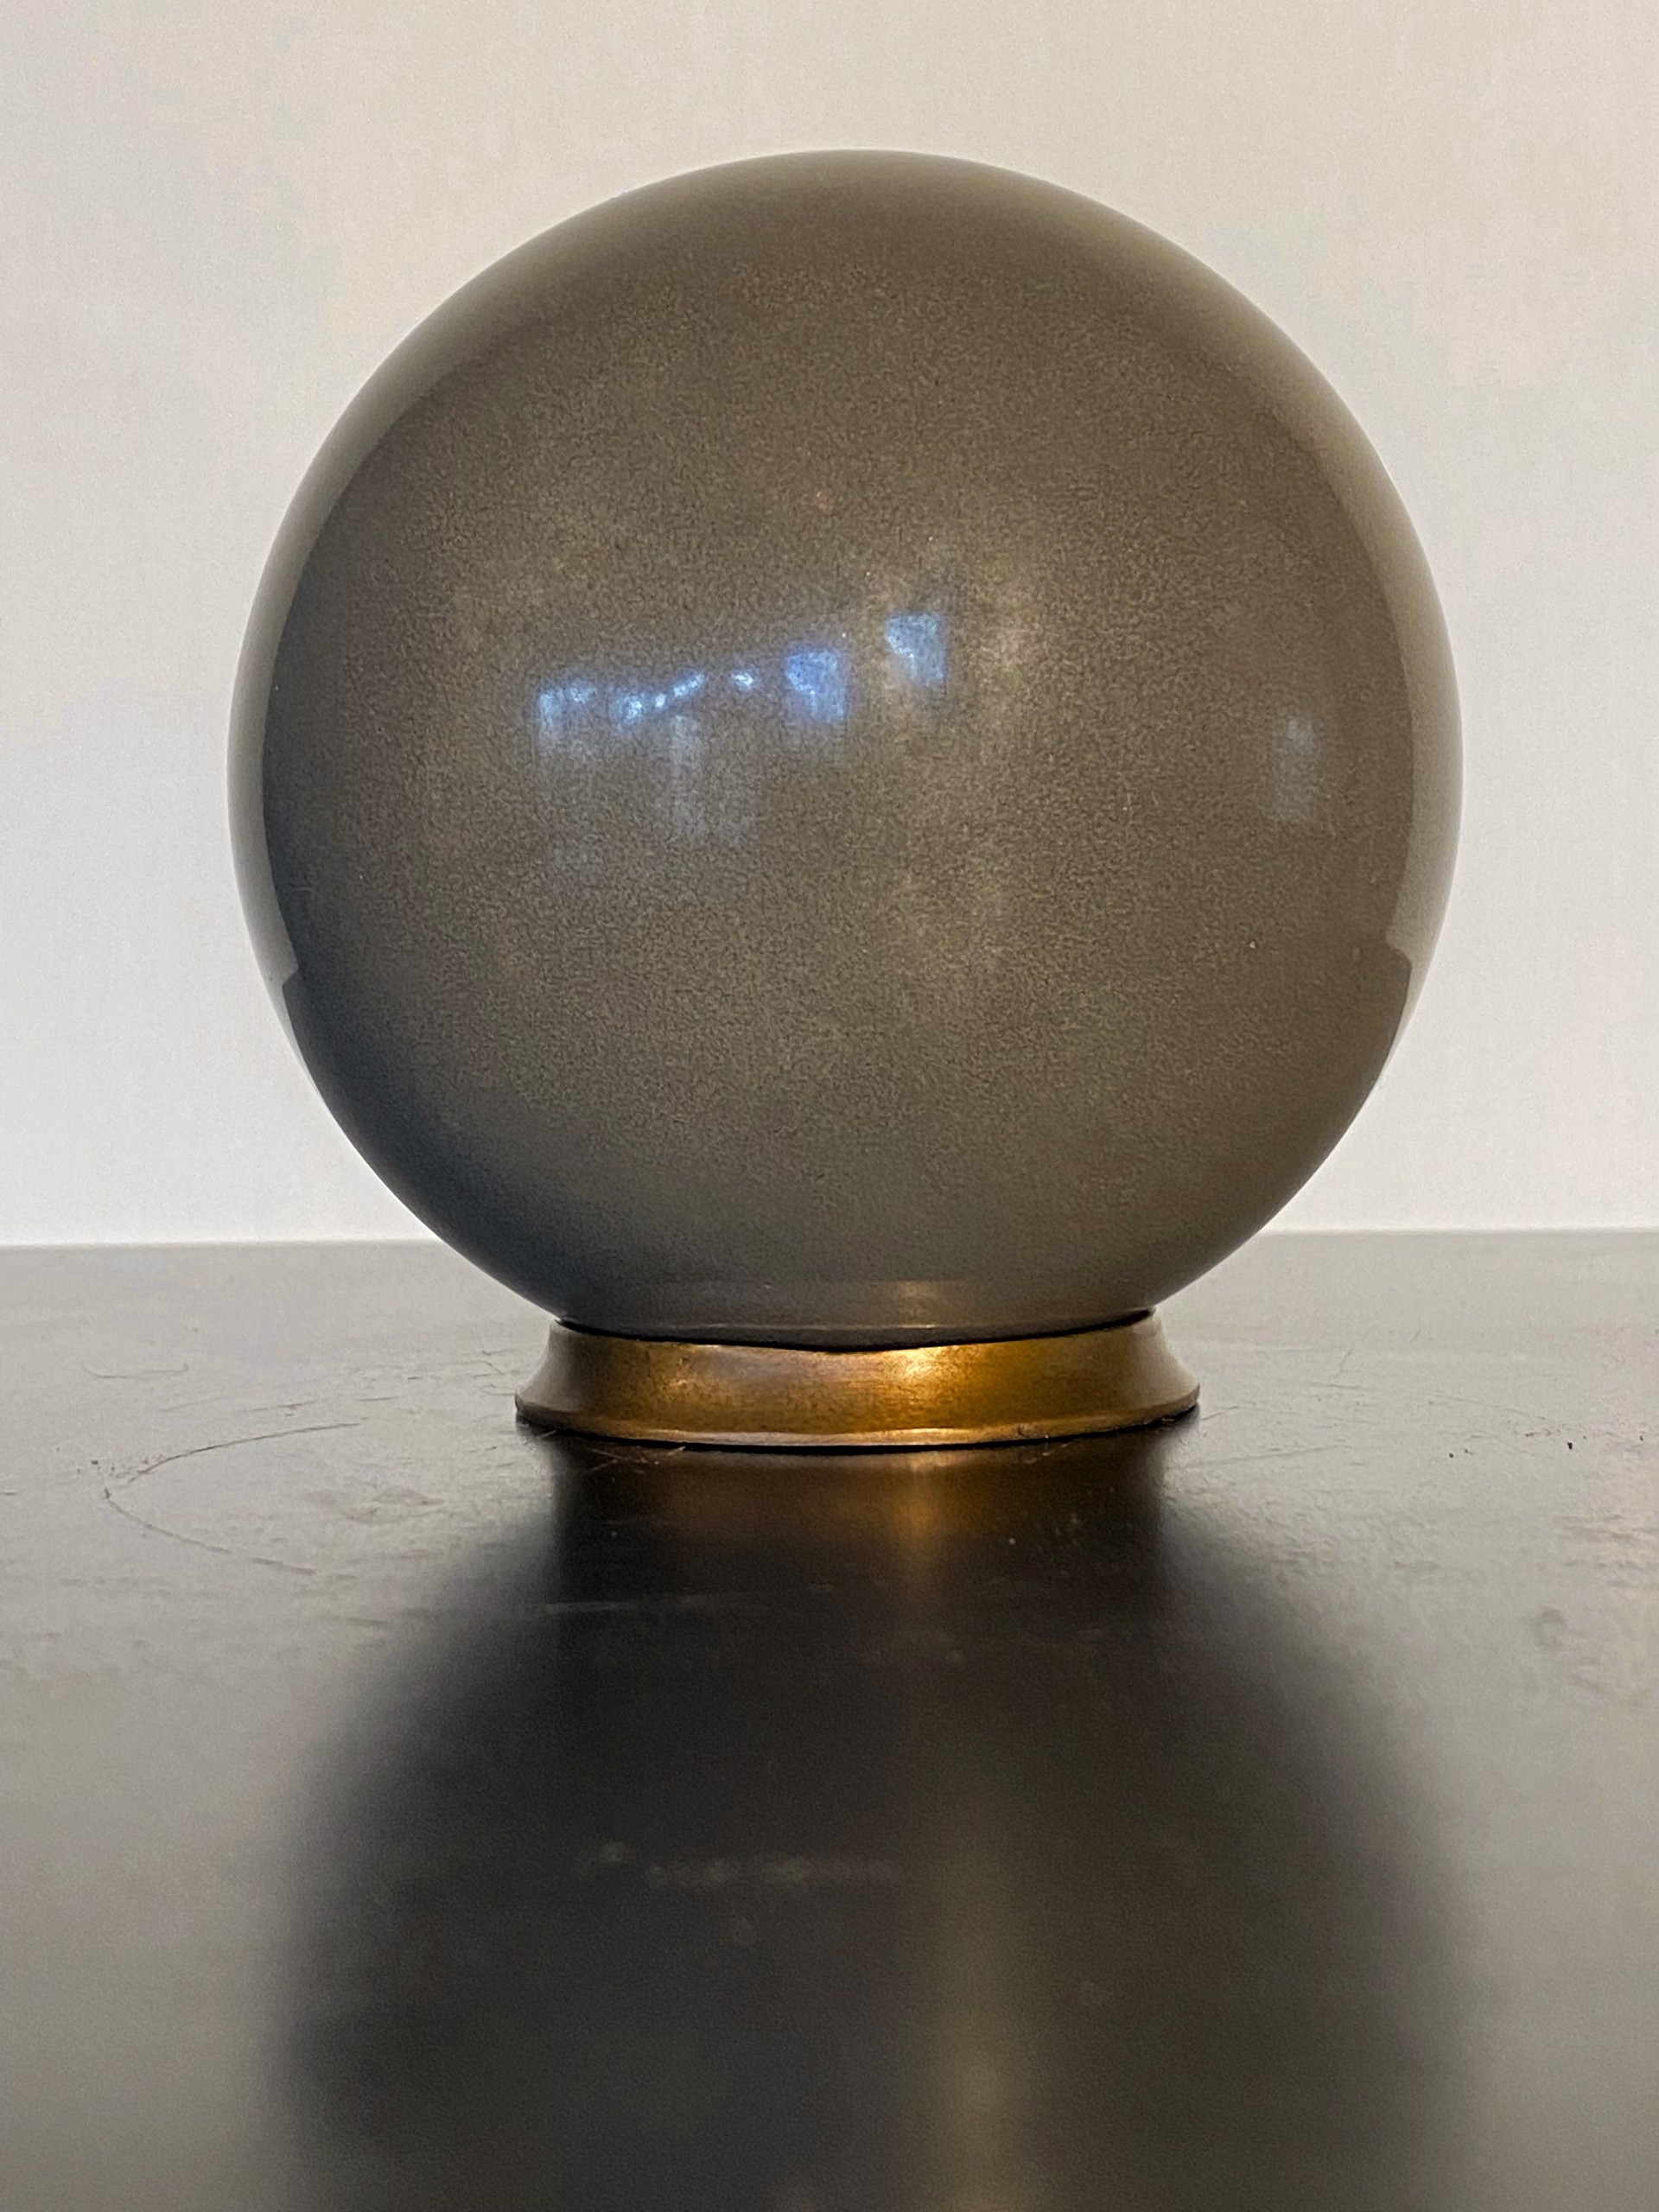 Earth Sphere #7 by Bruce Gardner